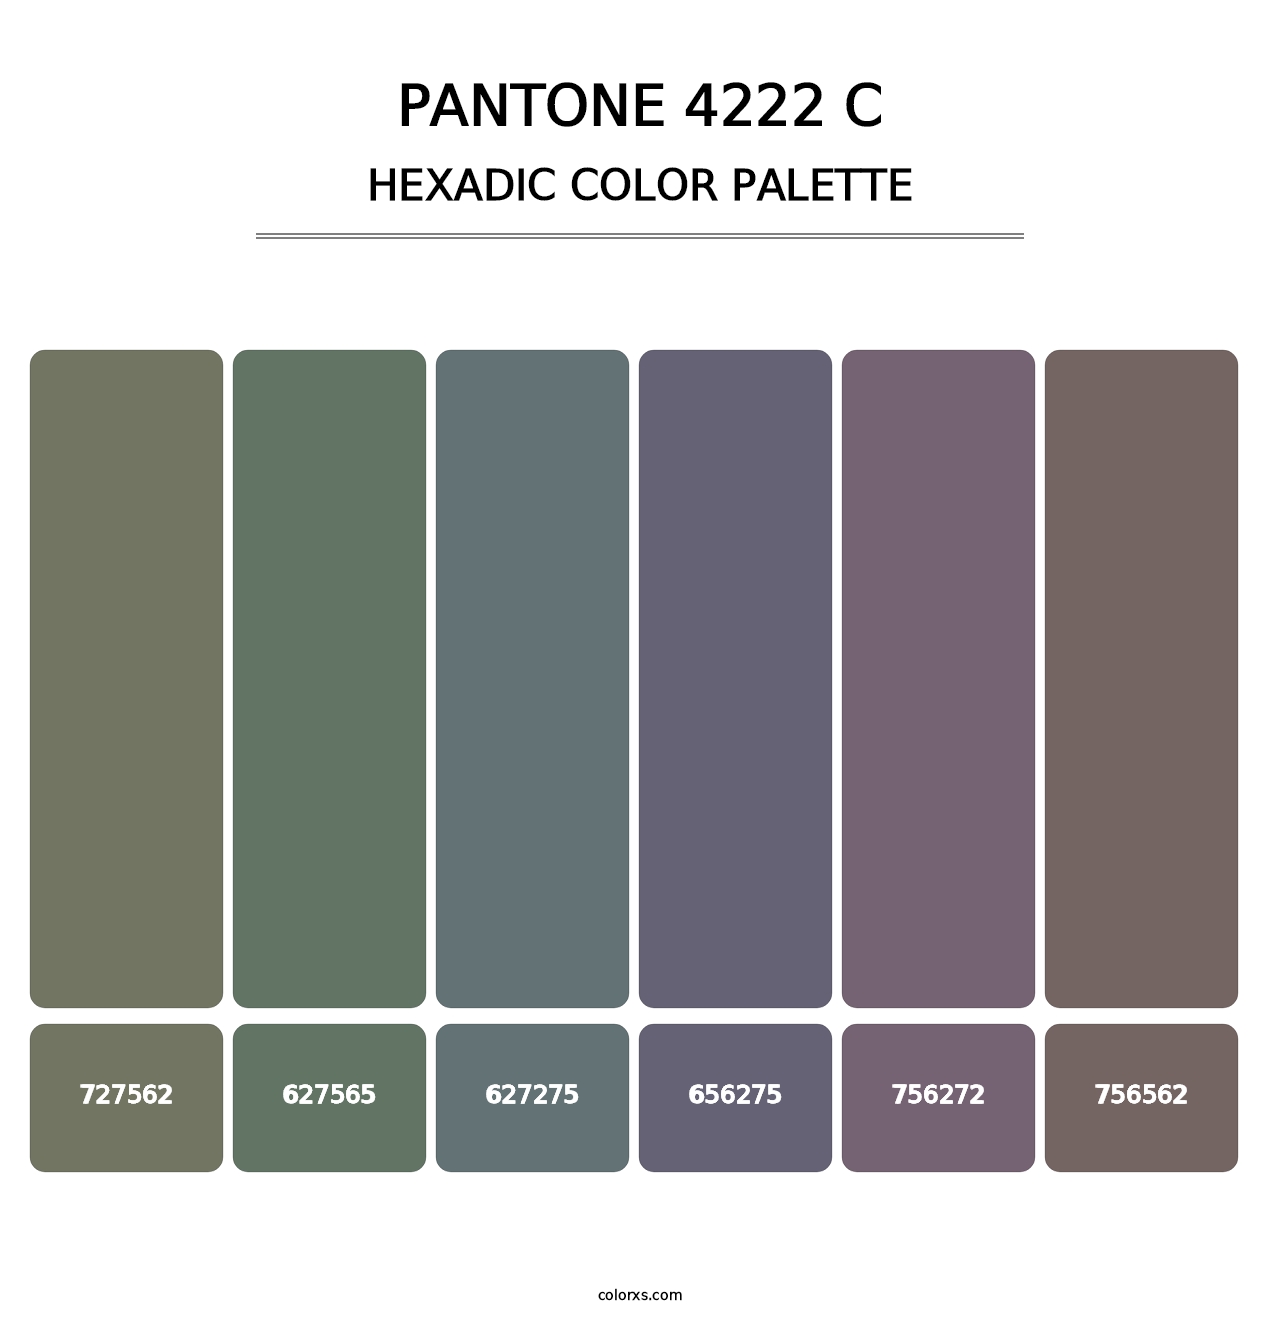 PANTONE 4222 C - Hexadic Color Palette